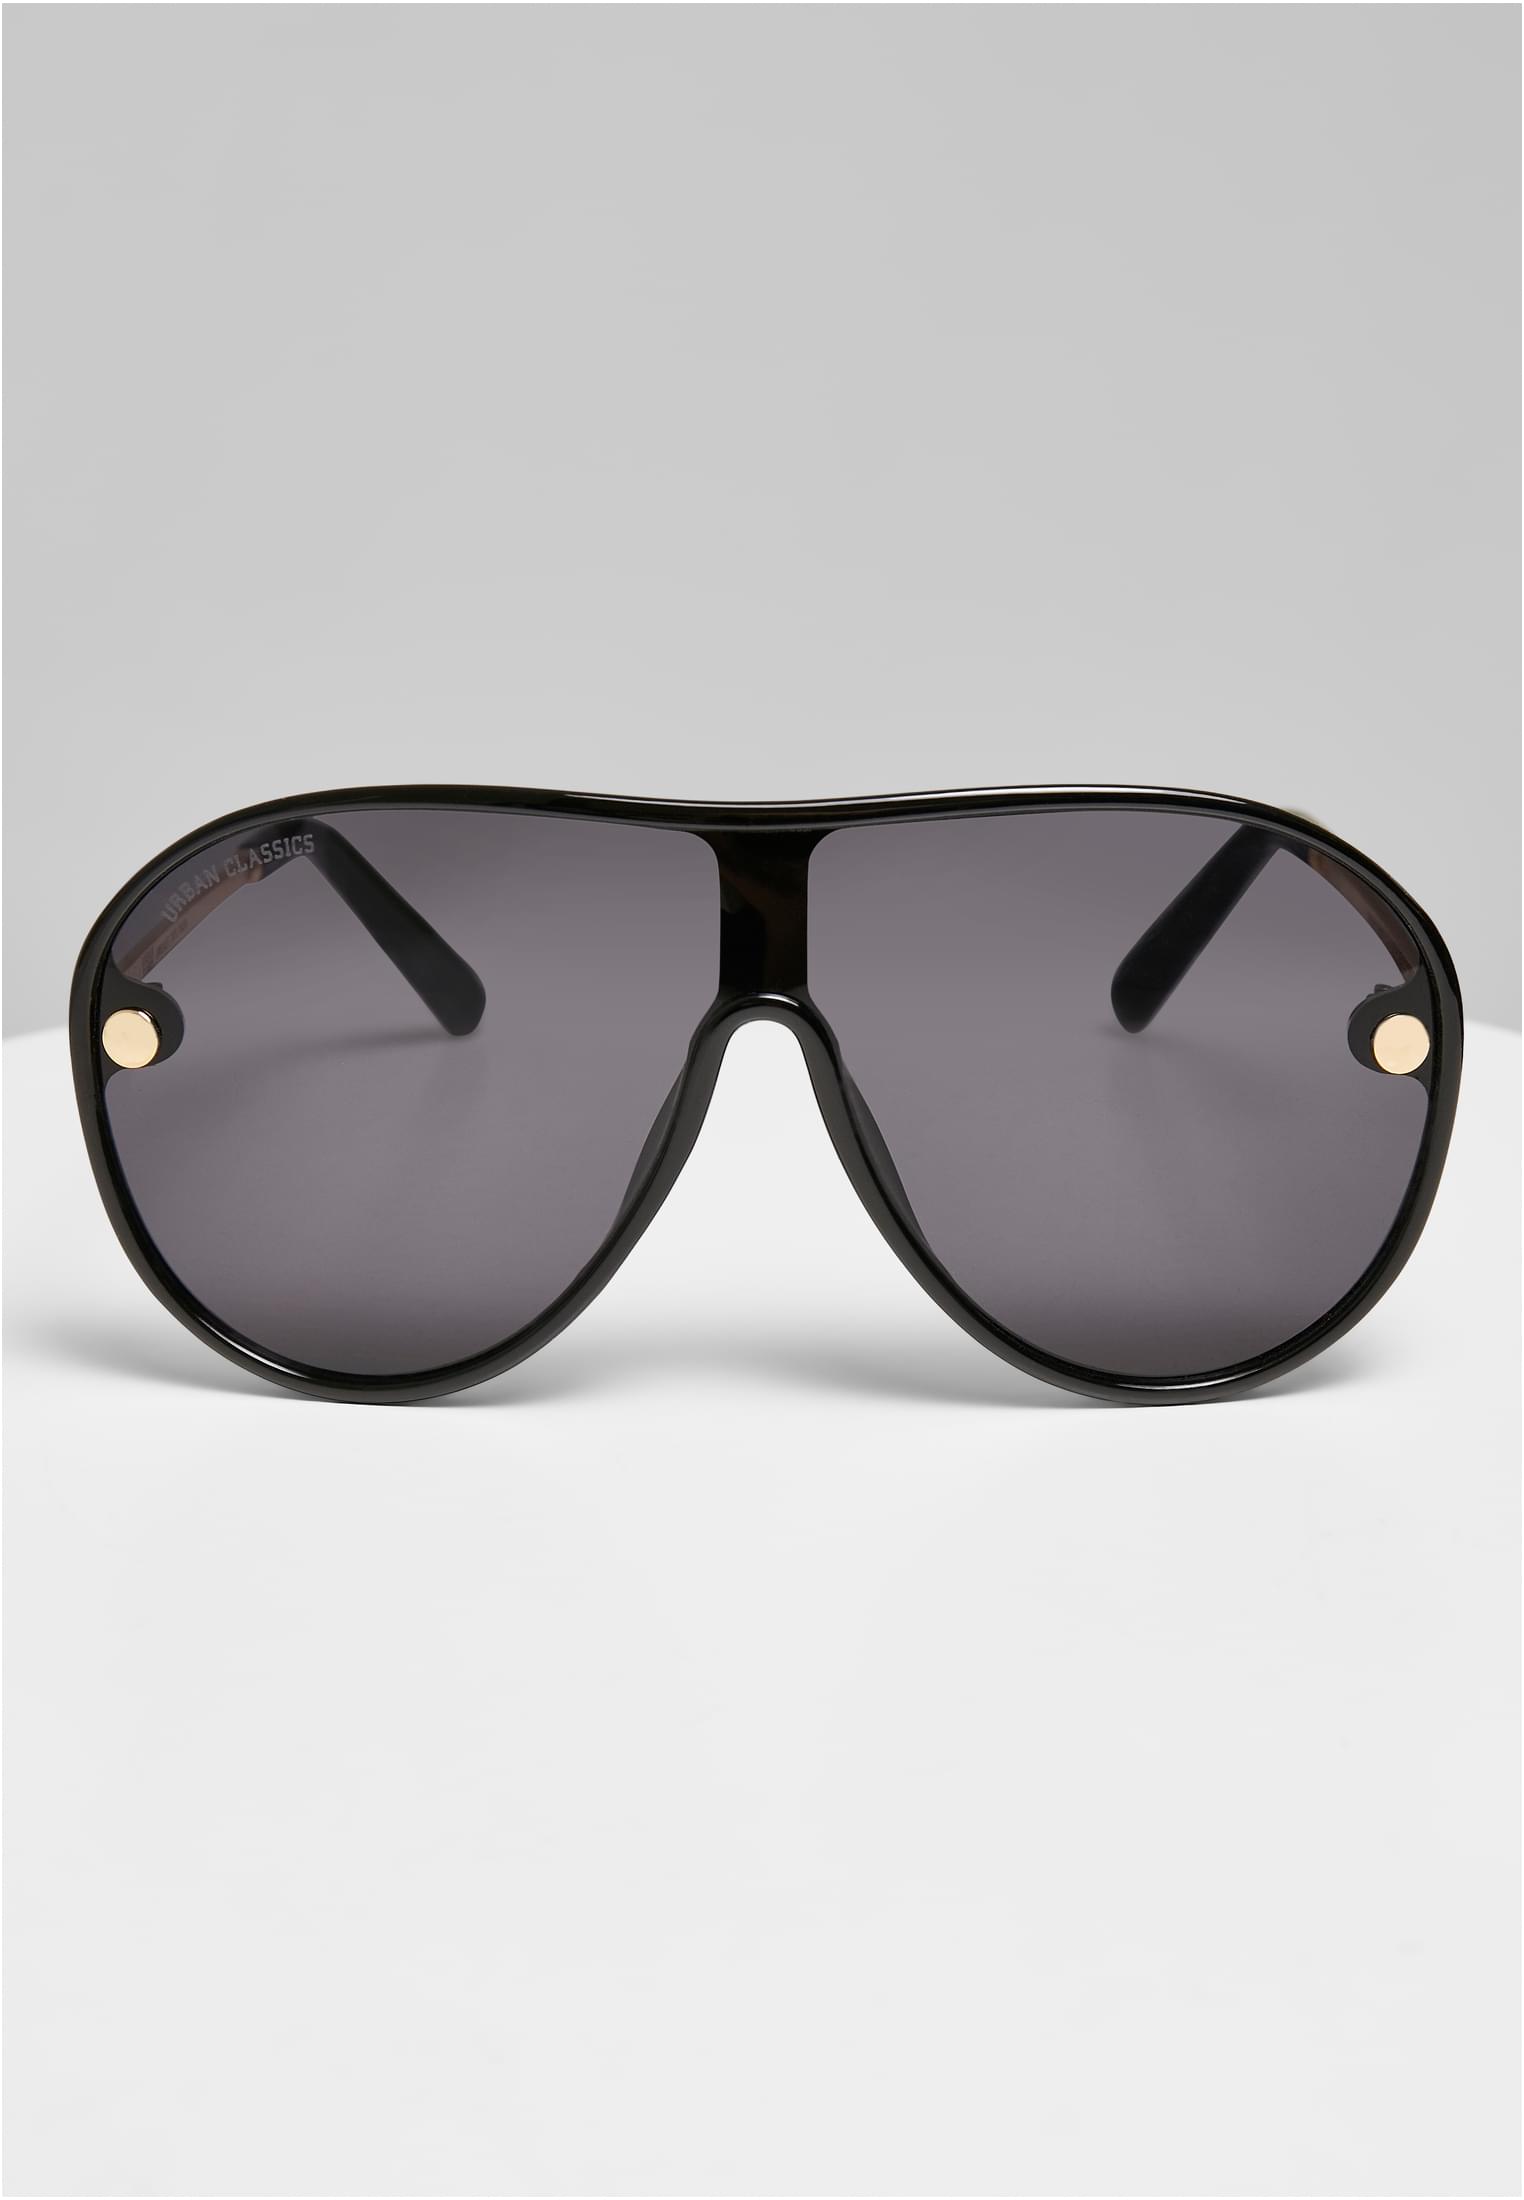 Naxos Sunglasses Chain-TB4209C With